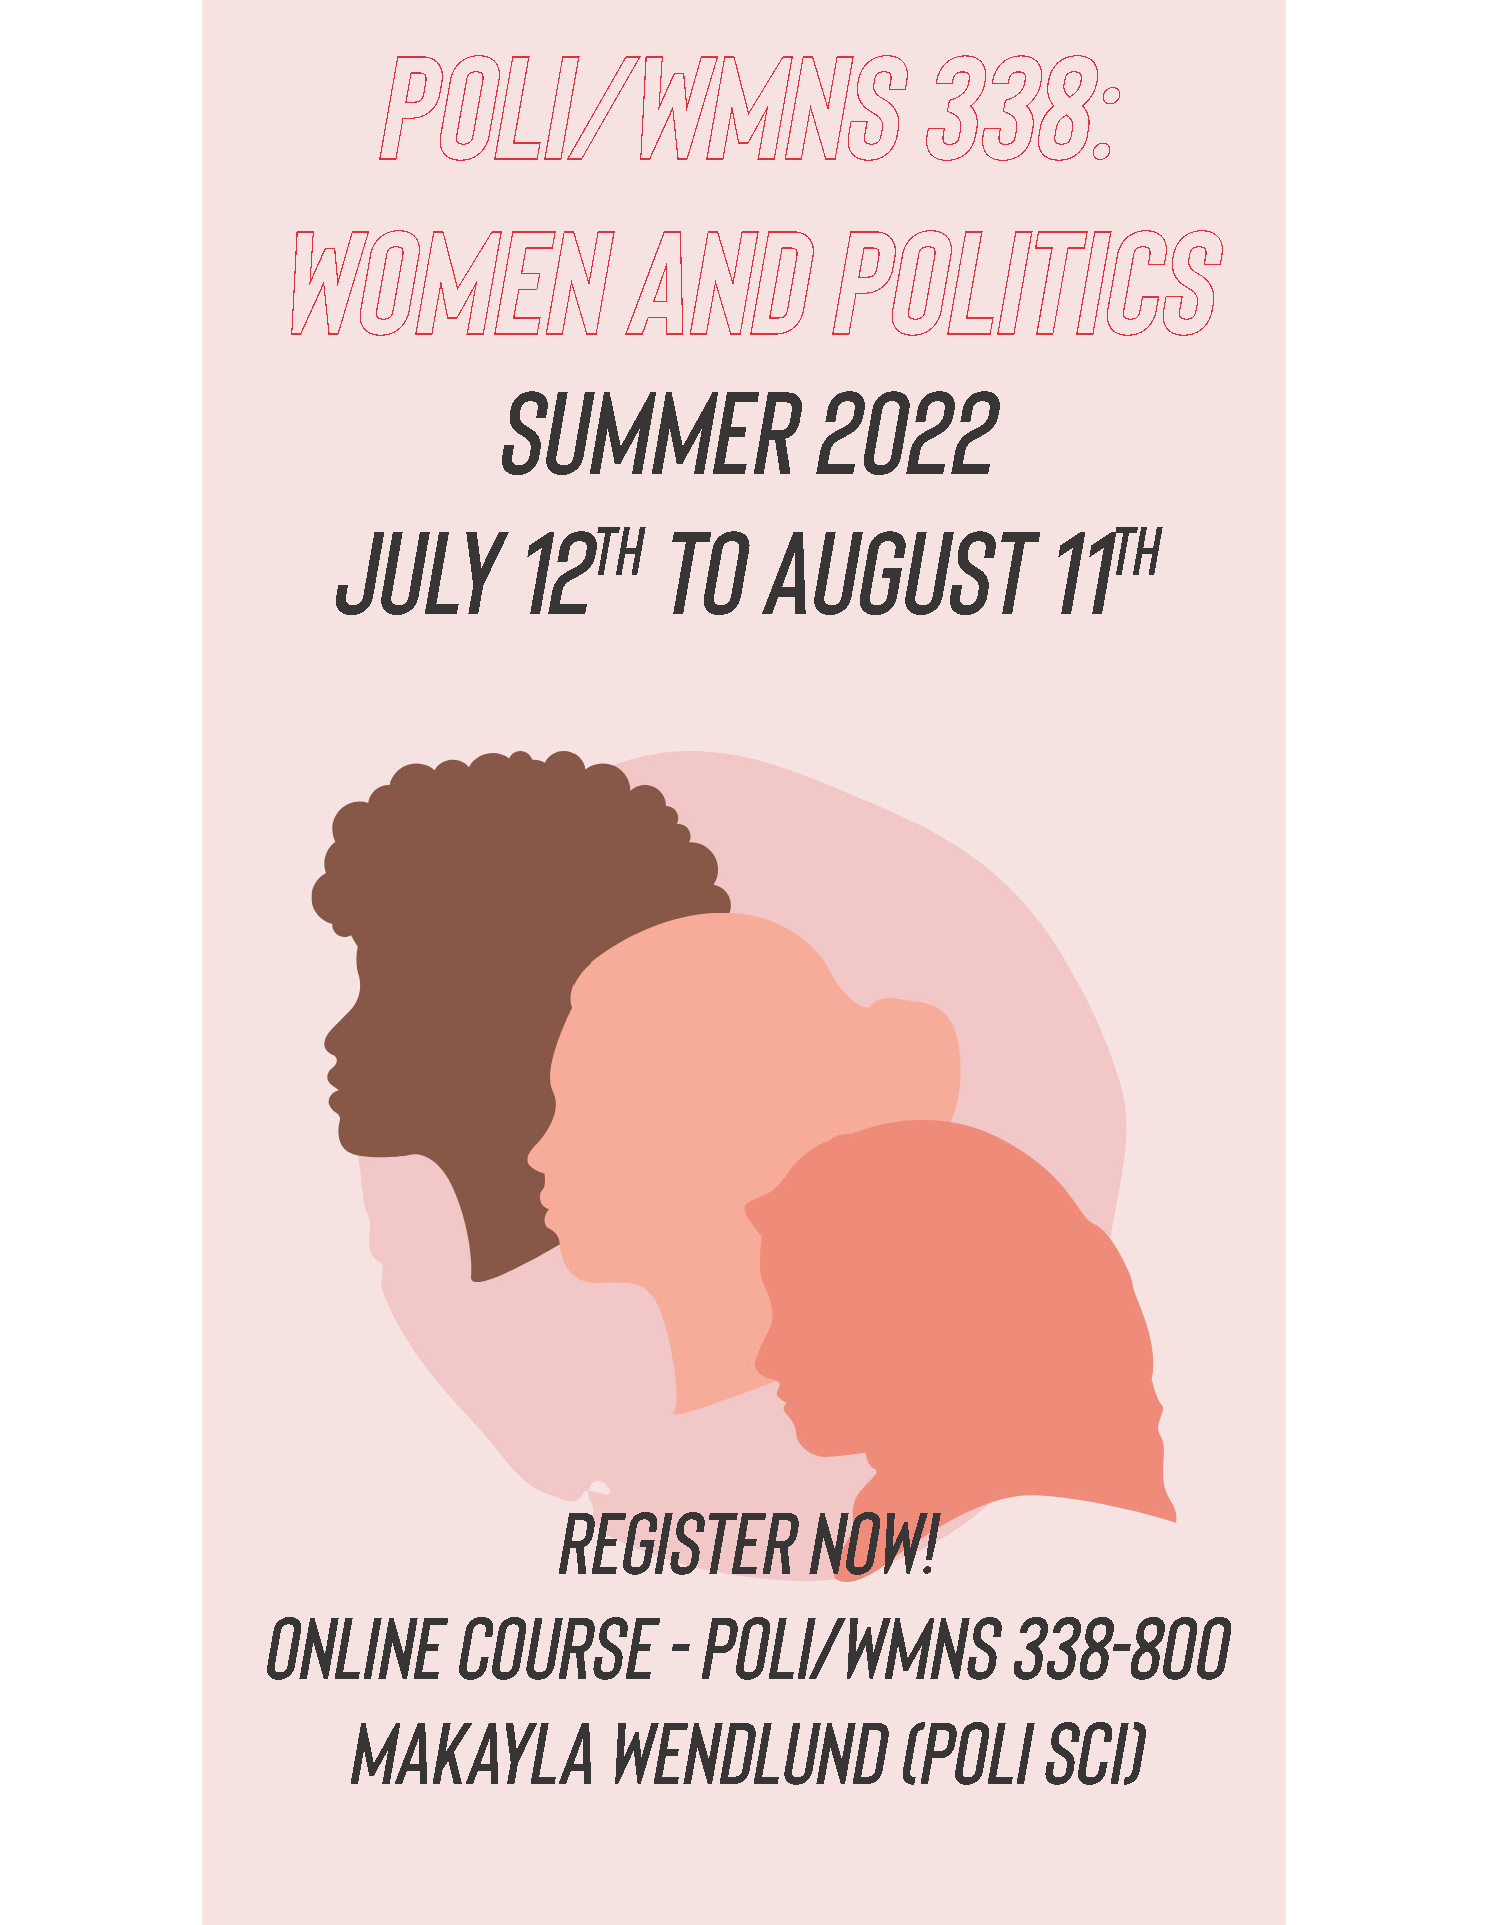 WMNS/POLI 338 "Women and Politics" For Summer 2022